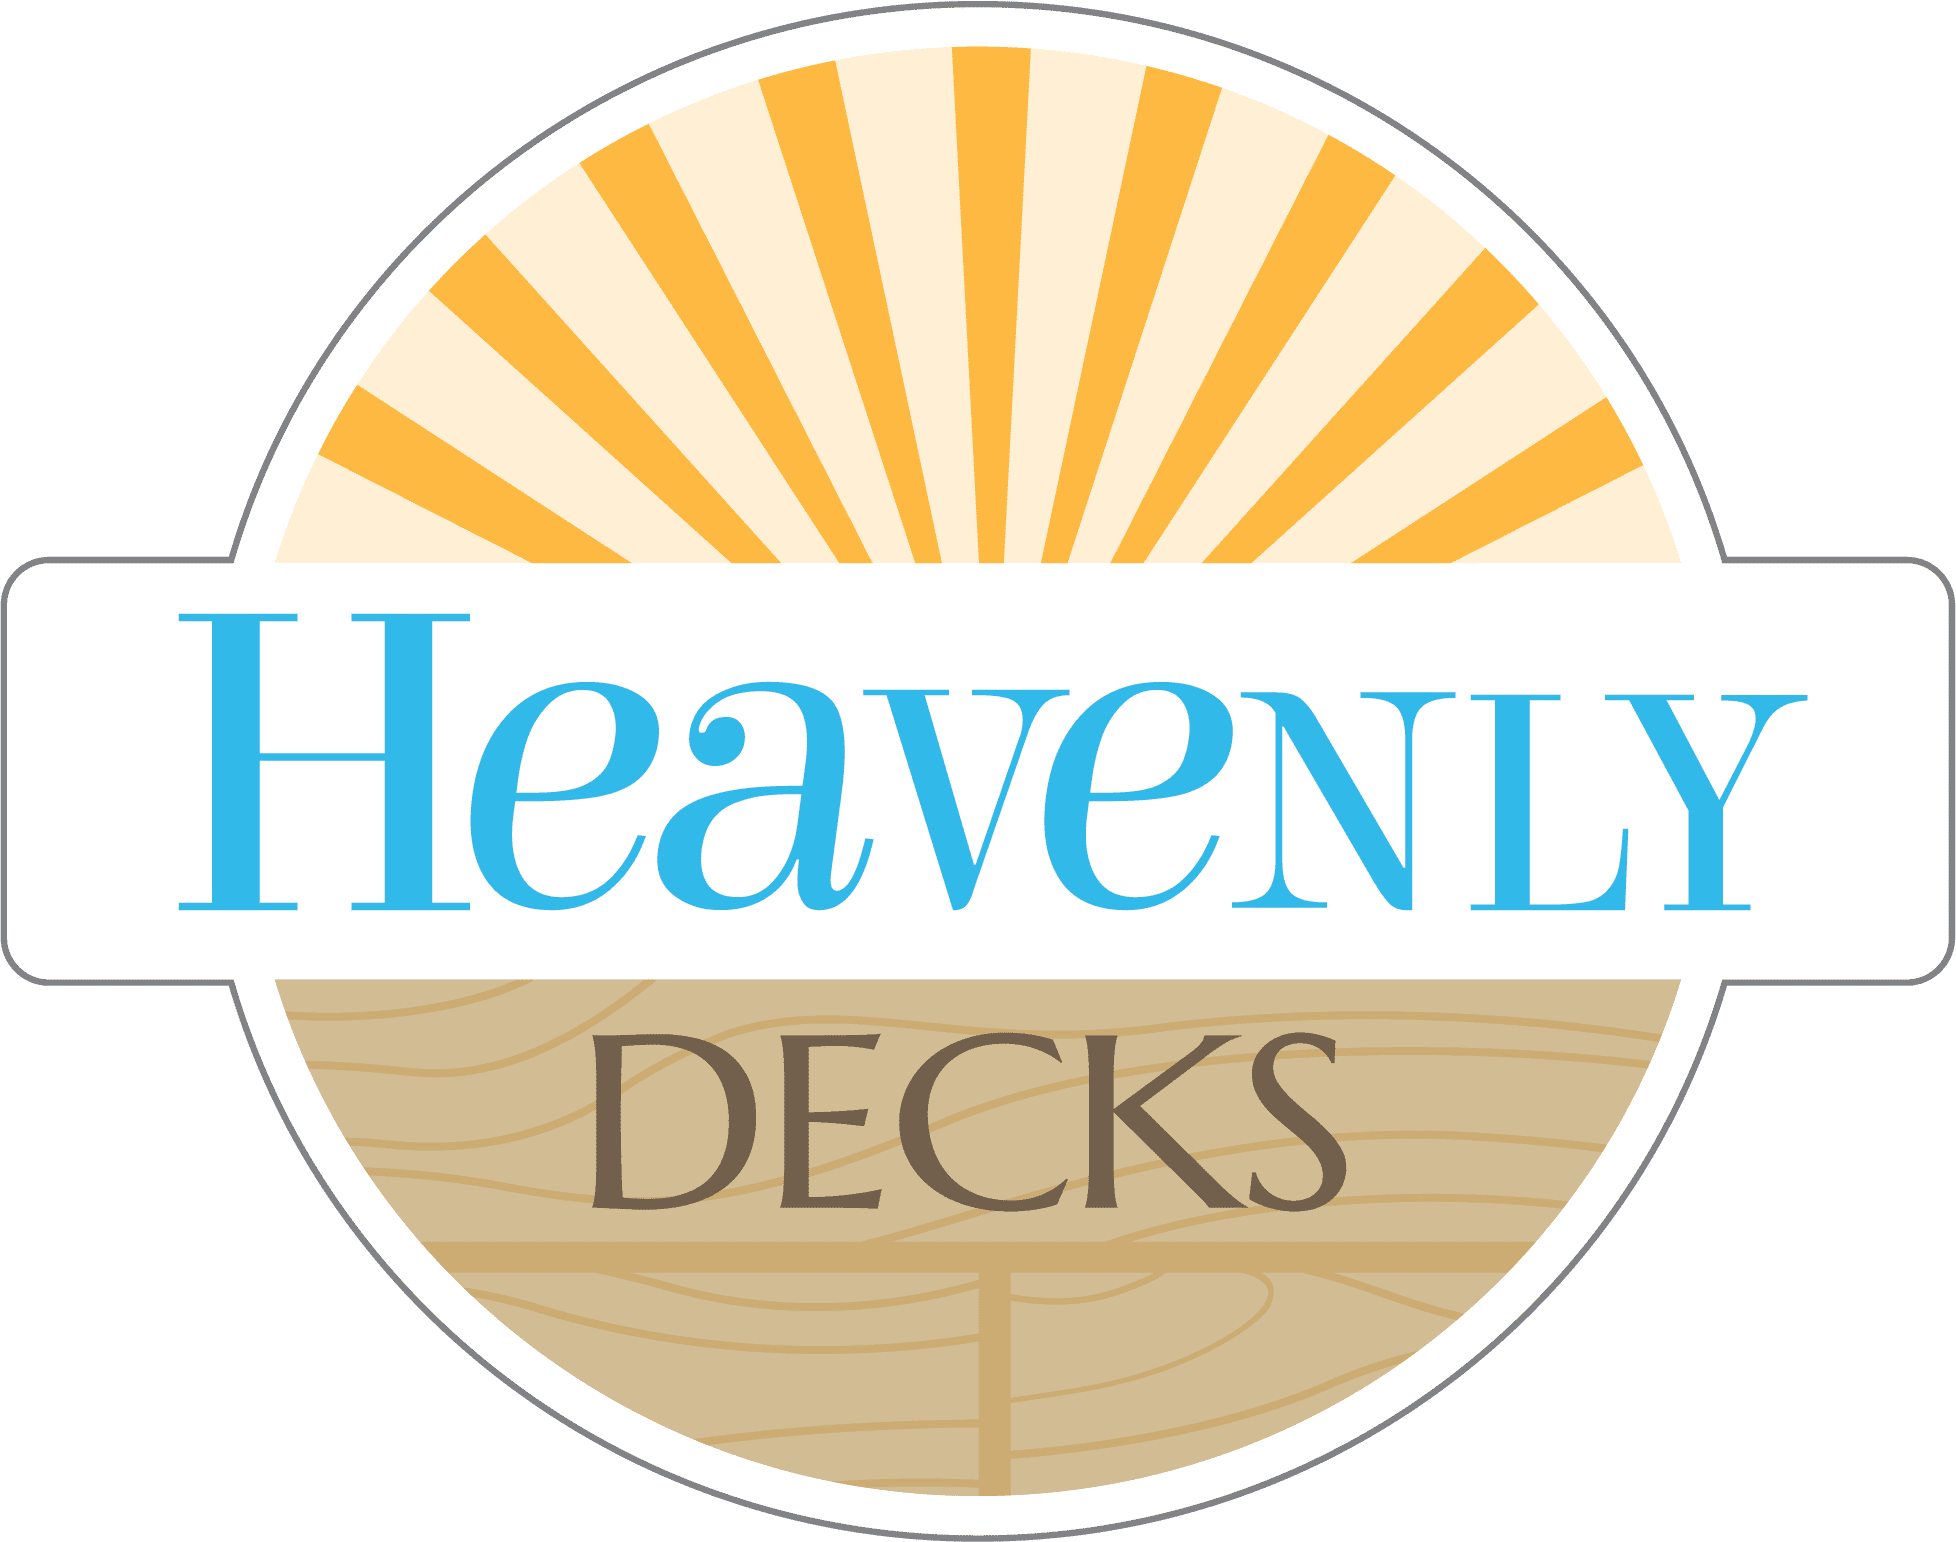 heavenly decks coors logo